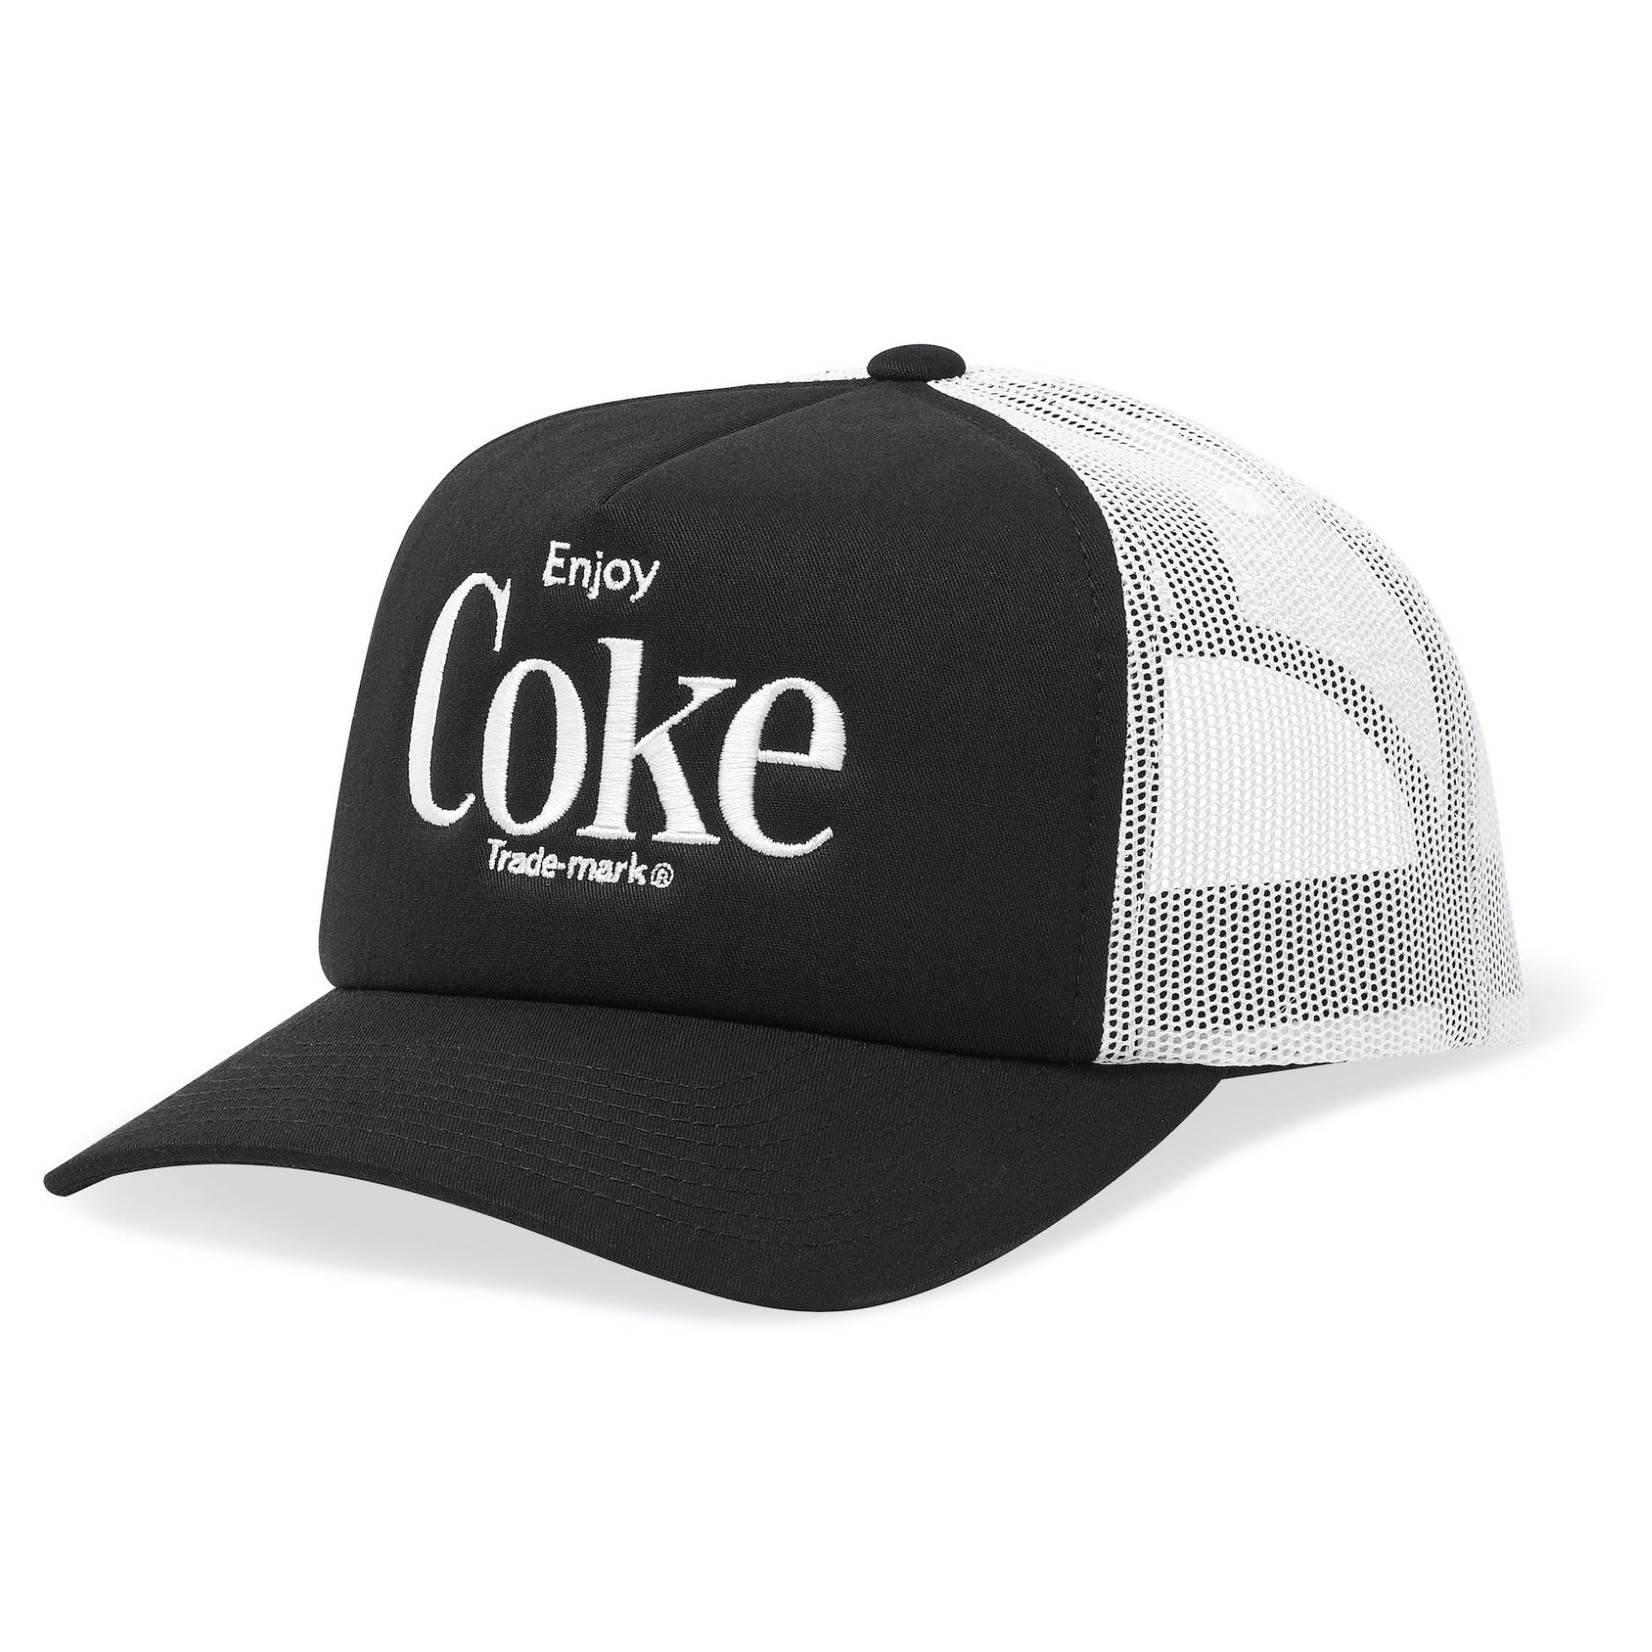 Enjoy Coca Cola Trucker Hat in Black